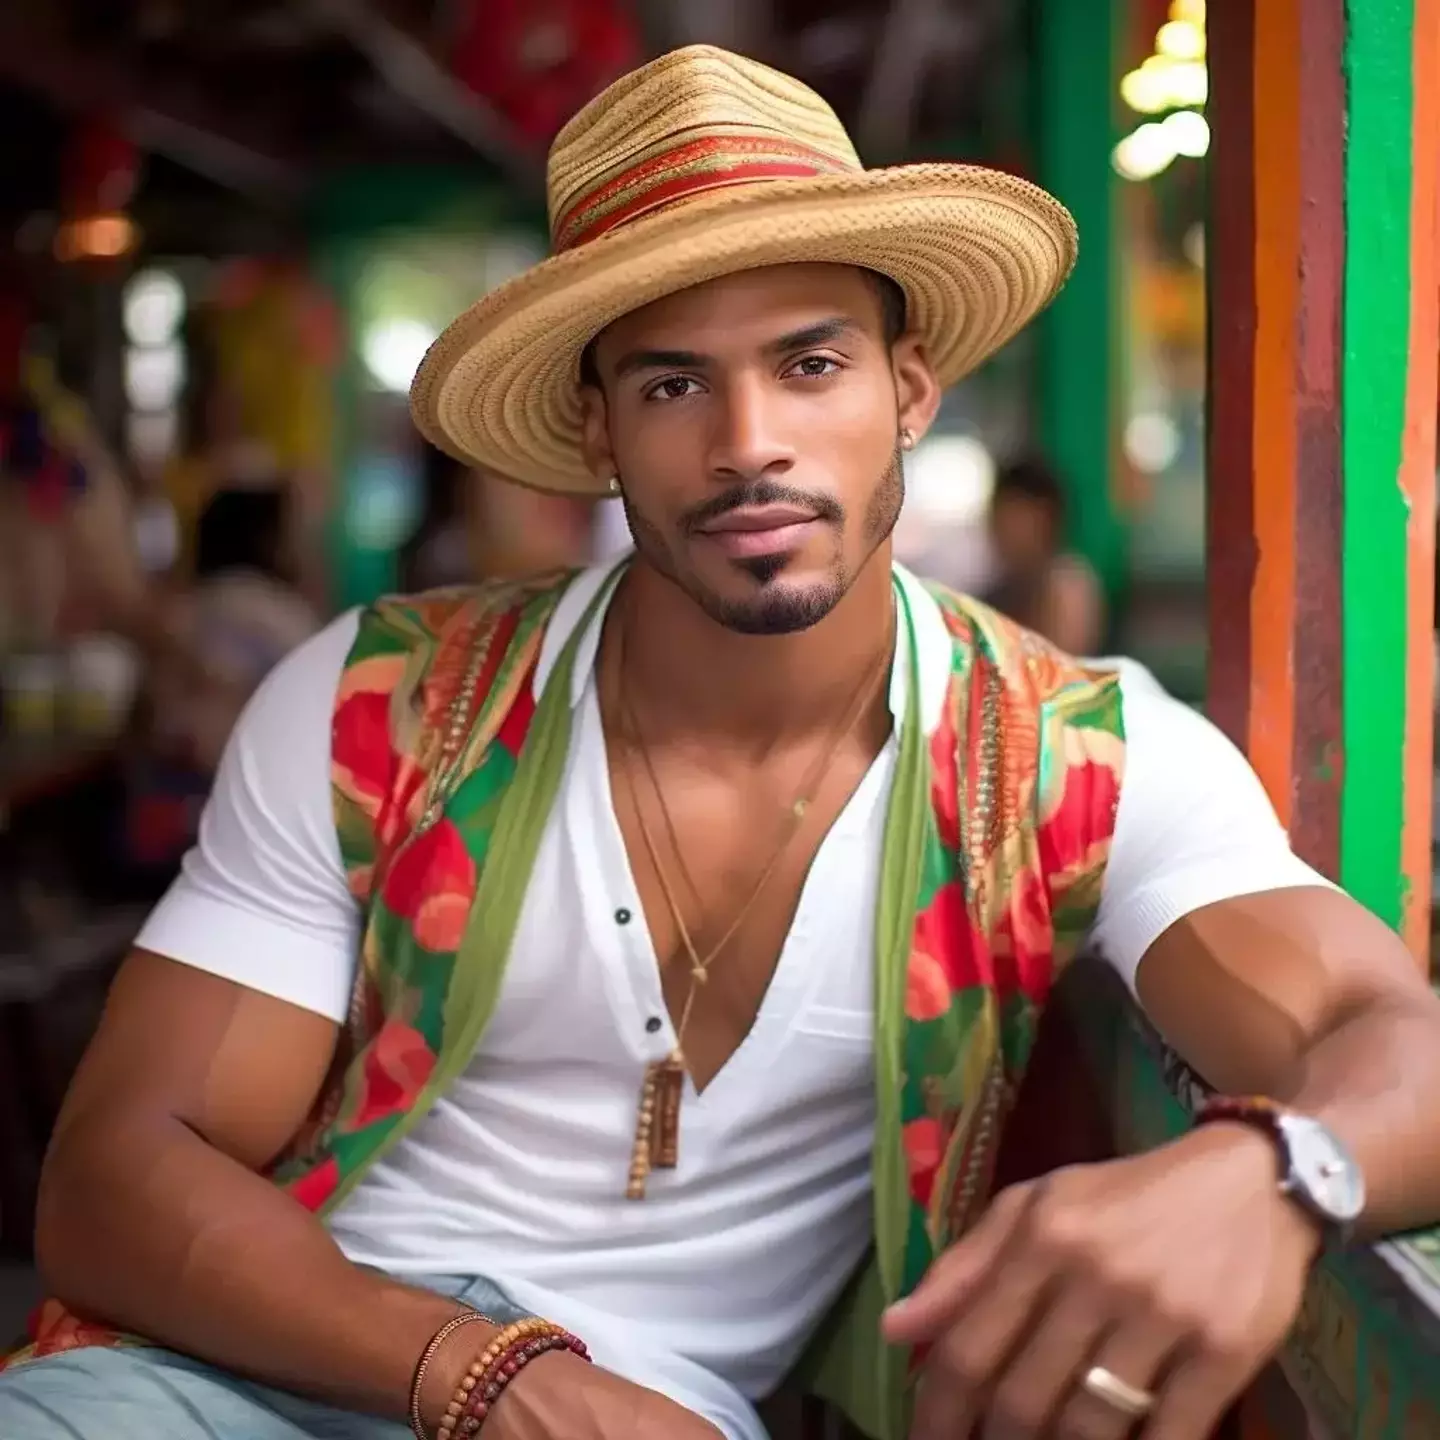 Nice hat, Mr Dominican Republic.